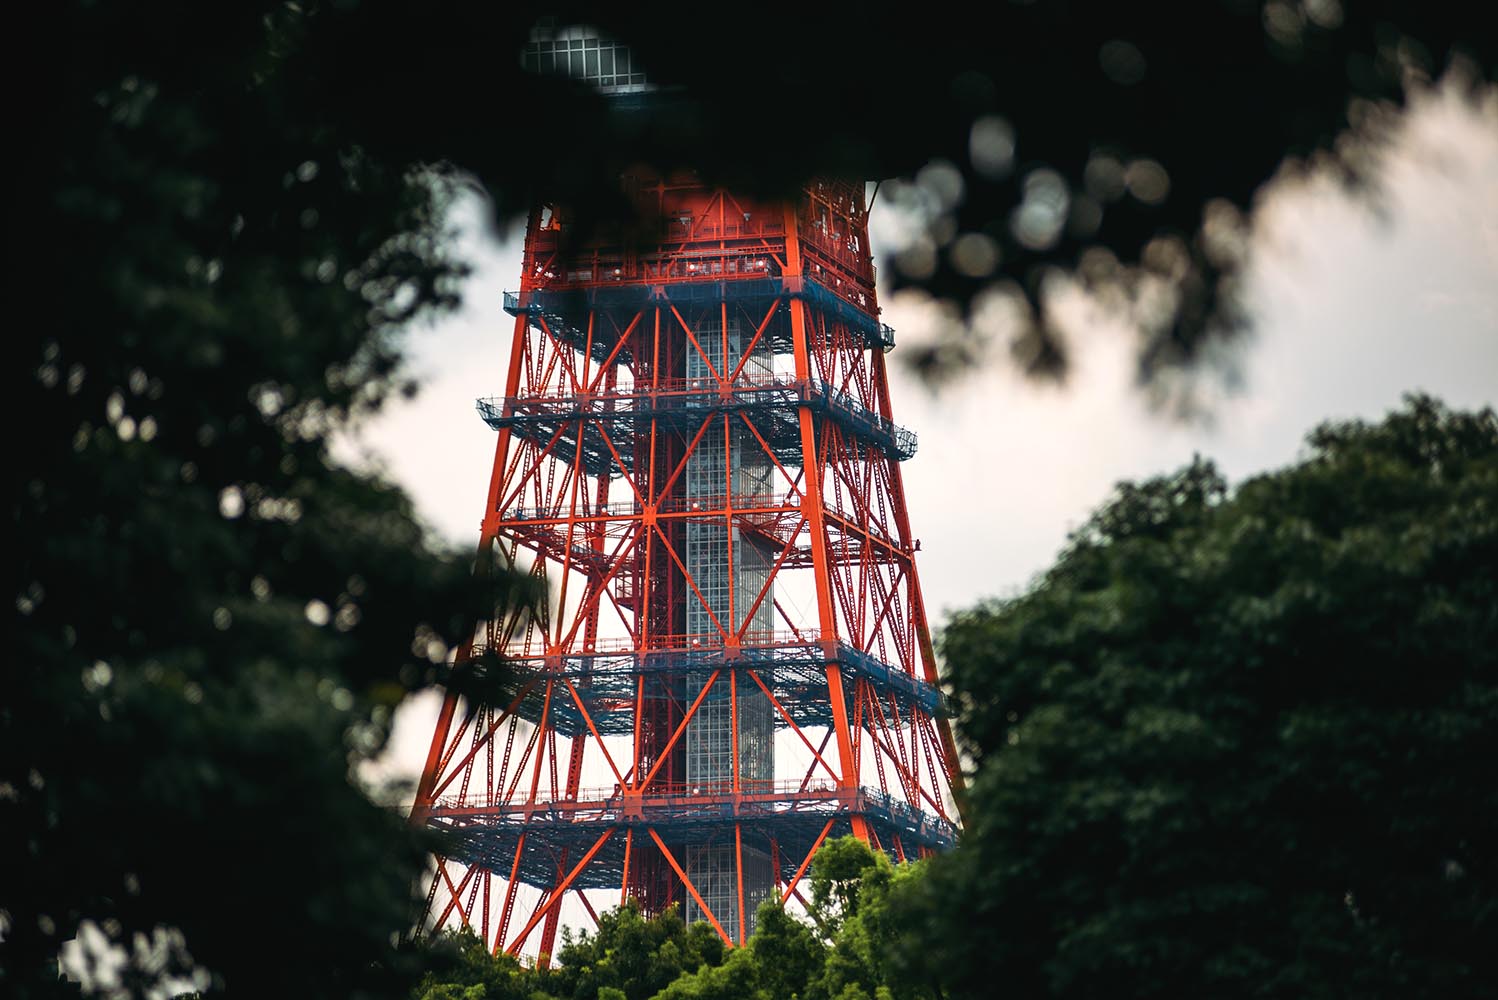 Tokyo Tower, Tokyo, Japan